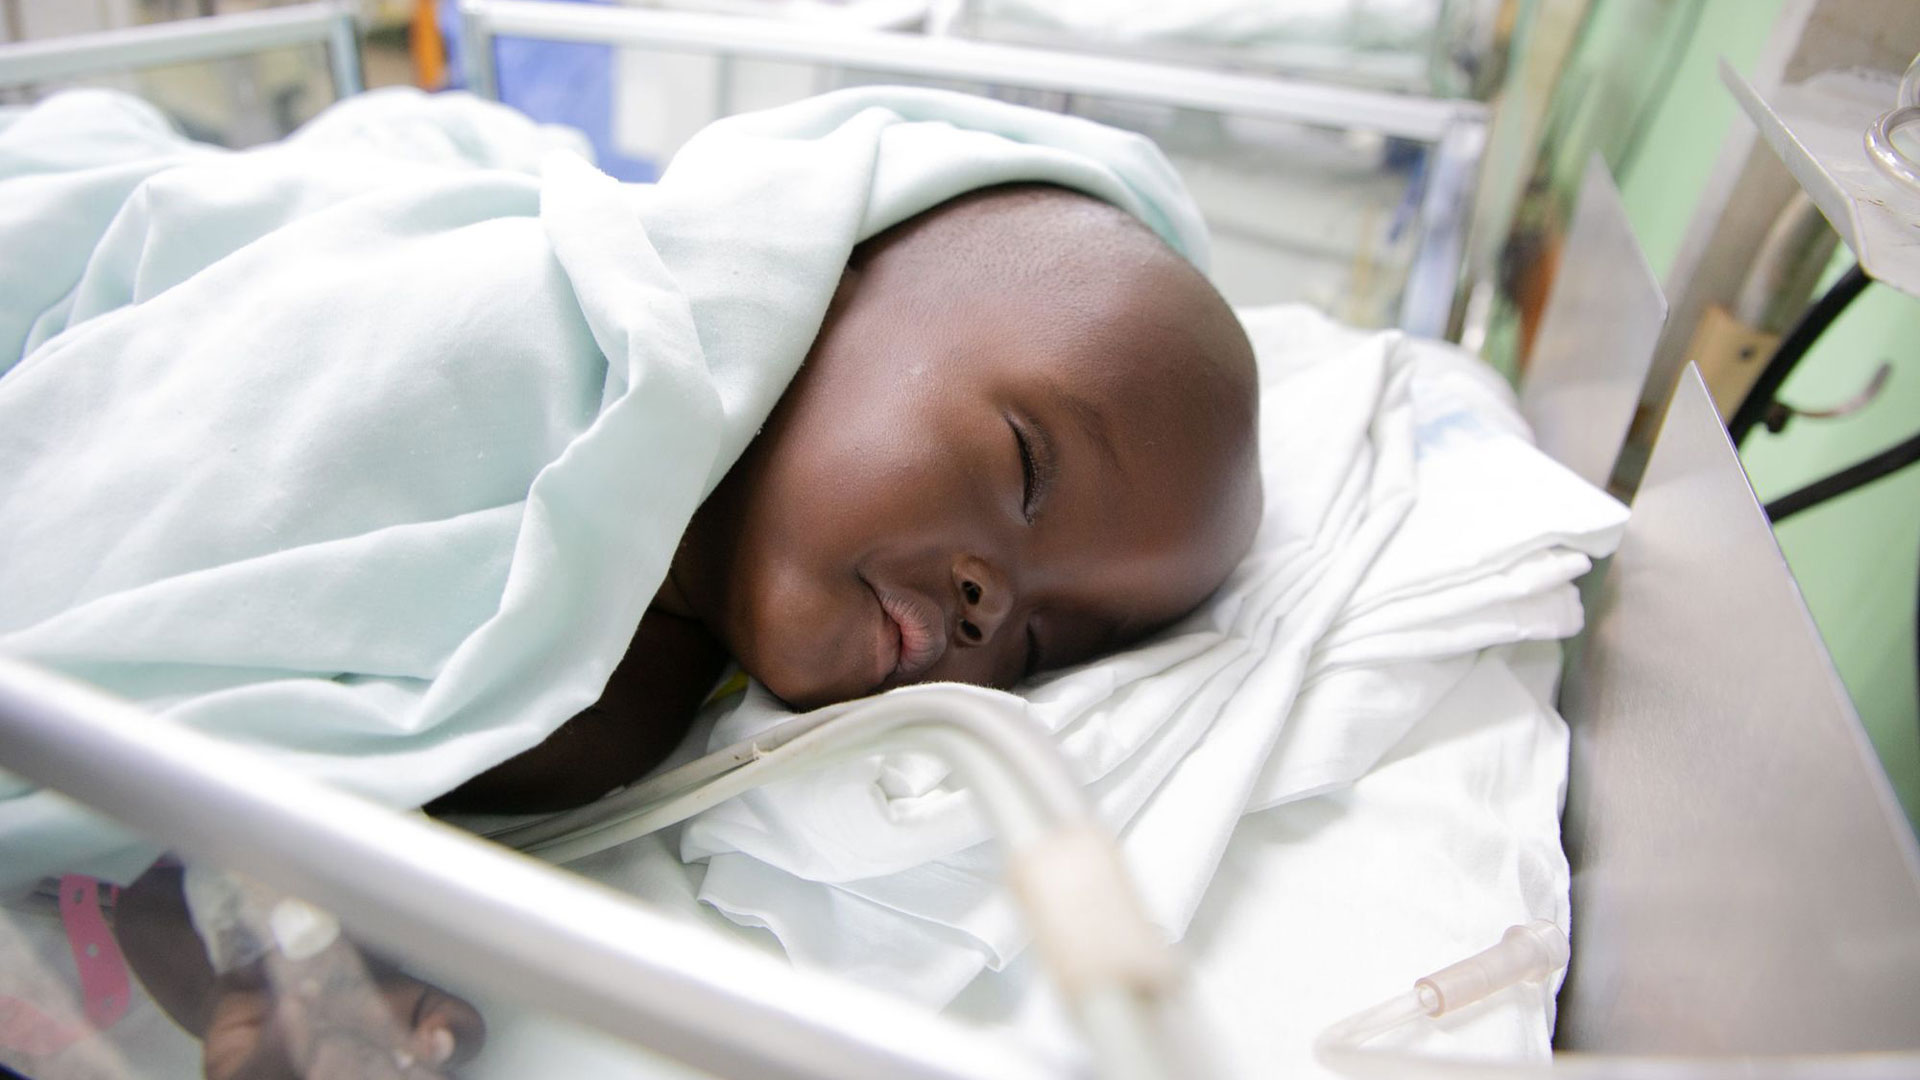 Factors affecting the survival of infants myelomeningocele in southeastern Uganda